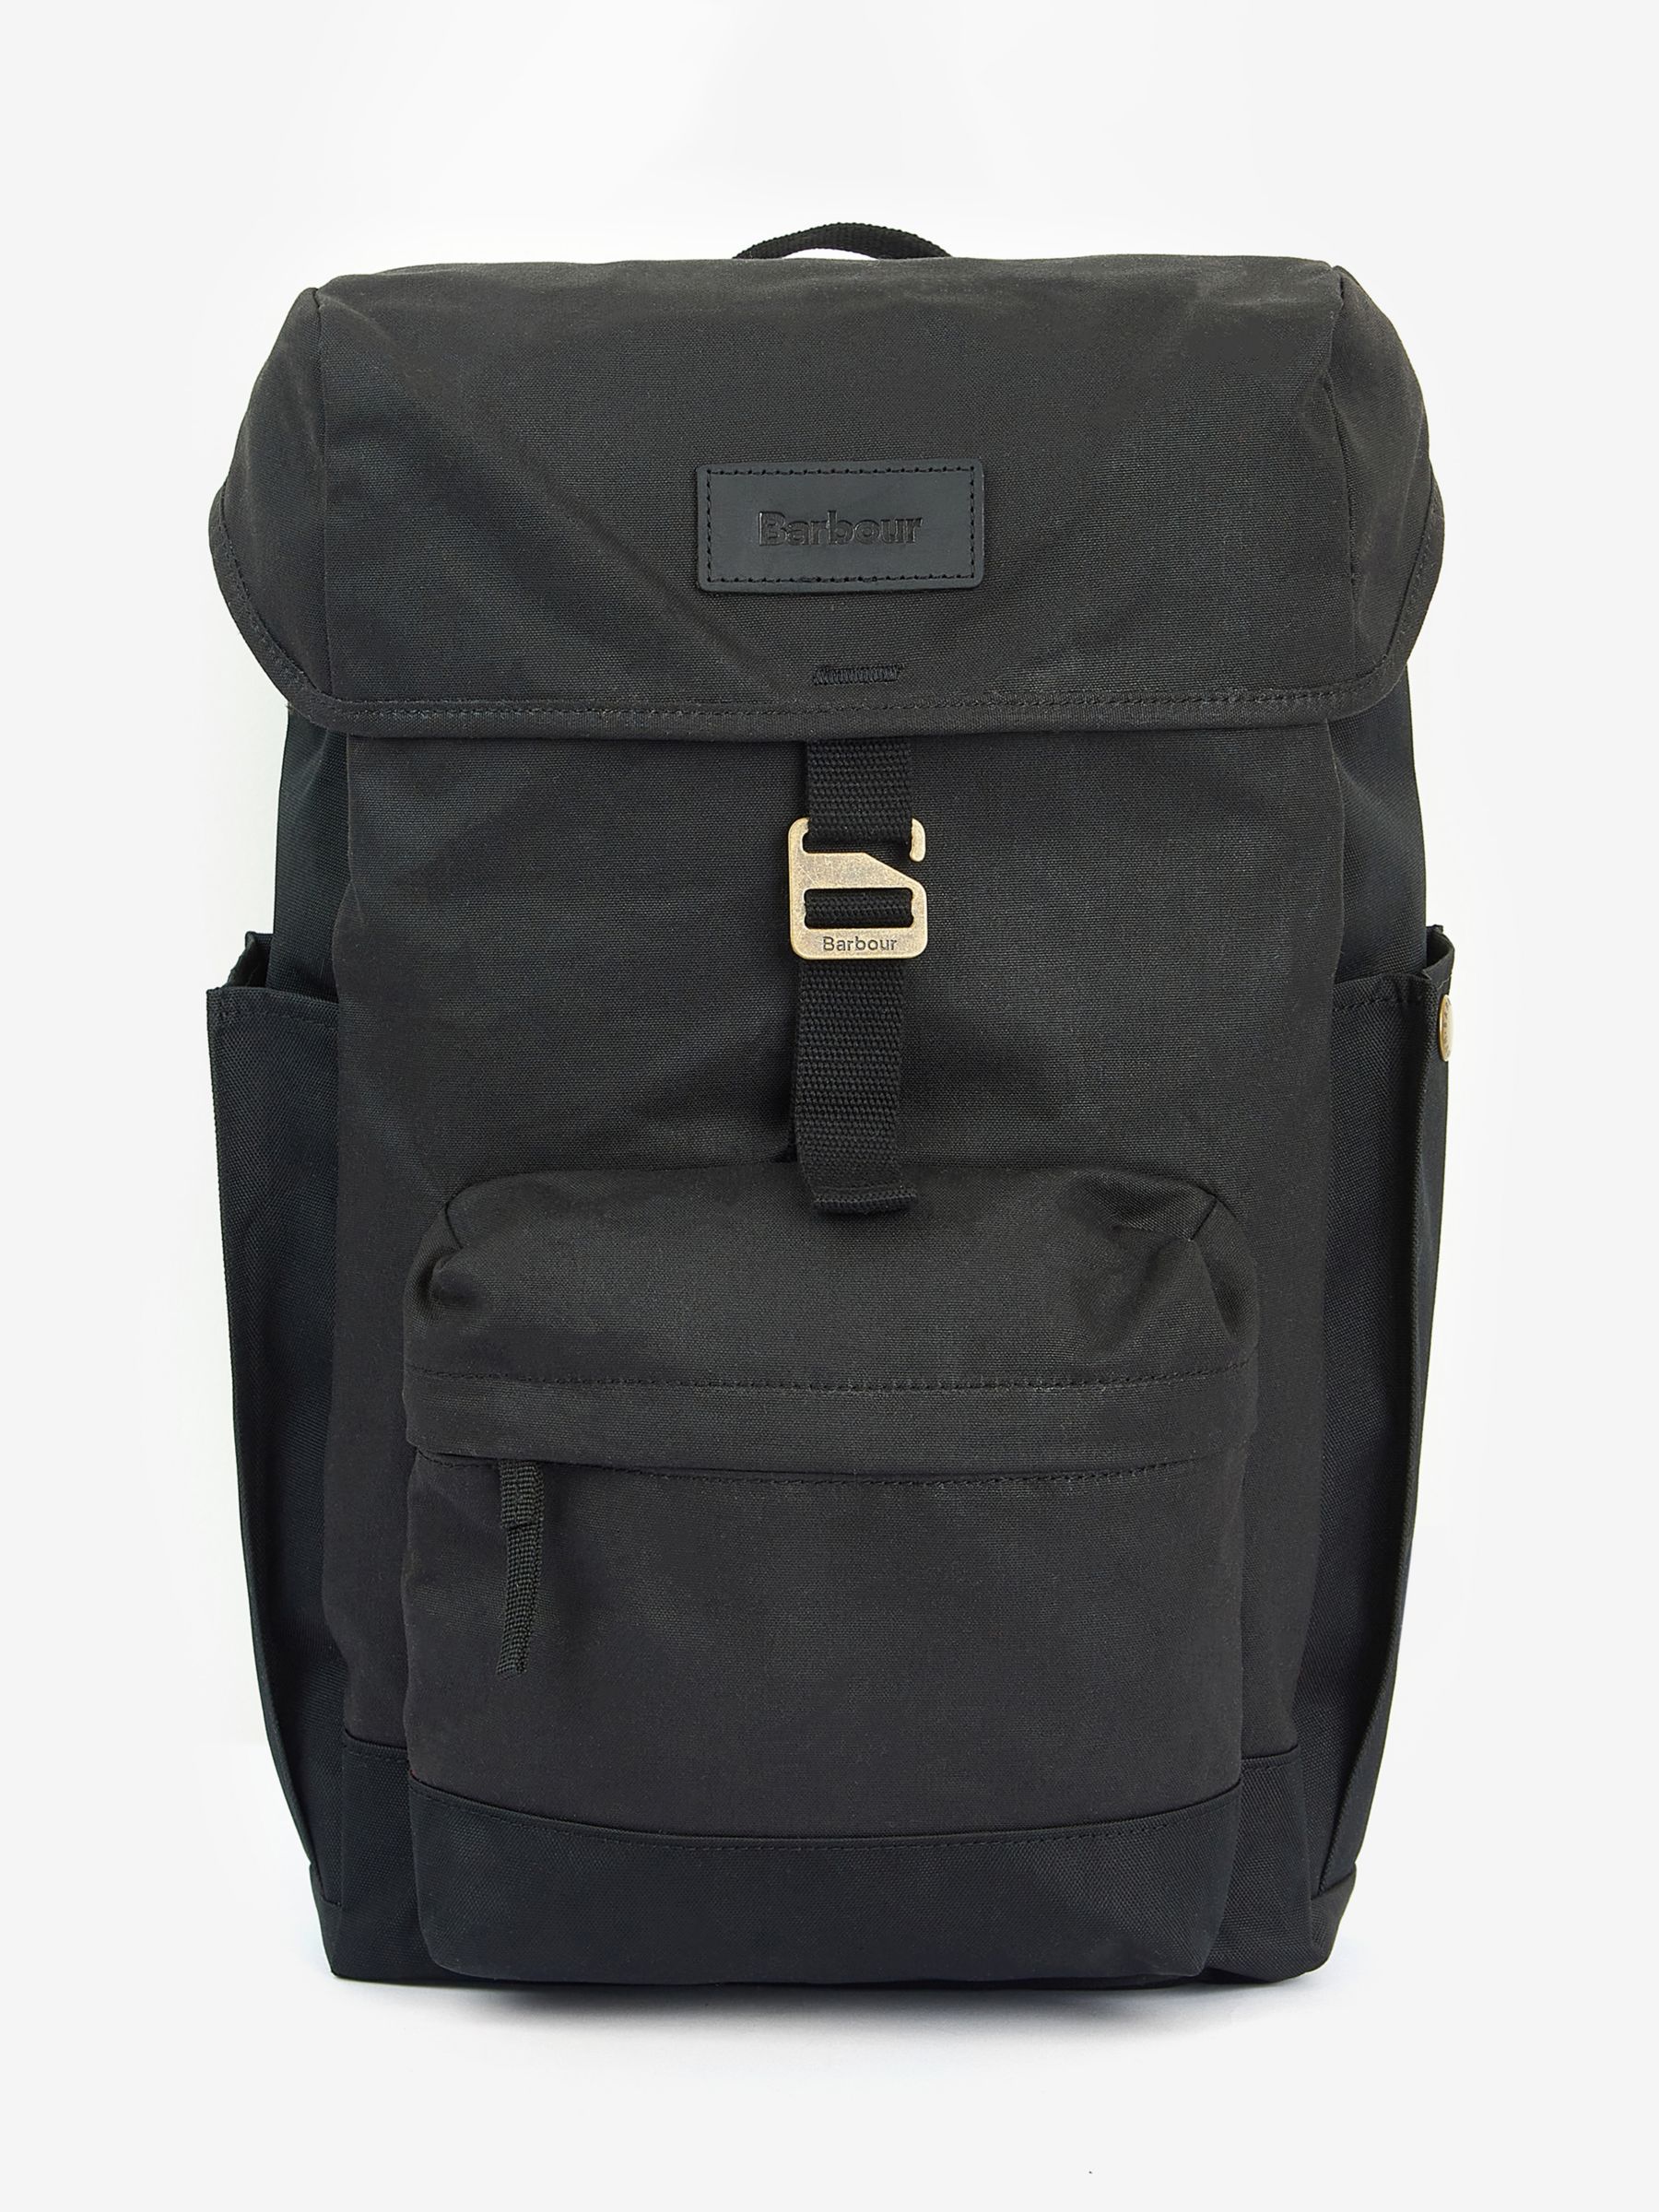 Barbour Essential Wax Backpack, Black at John Lewis & Partners